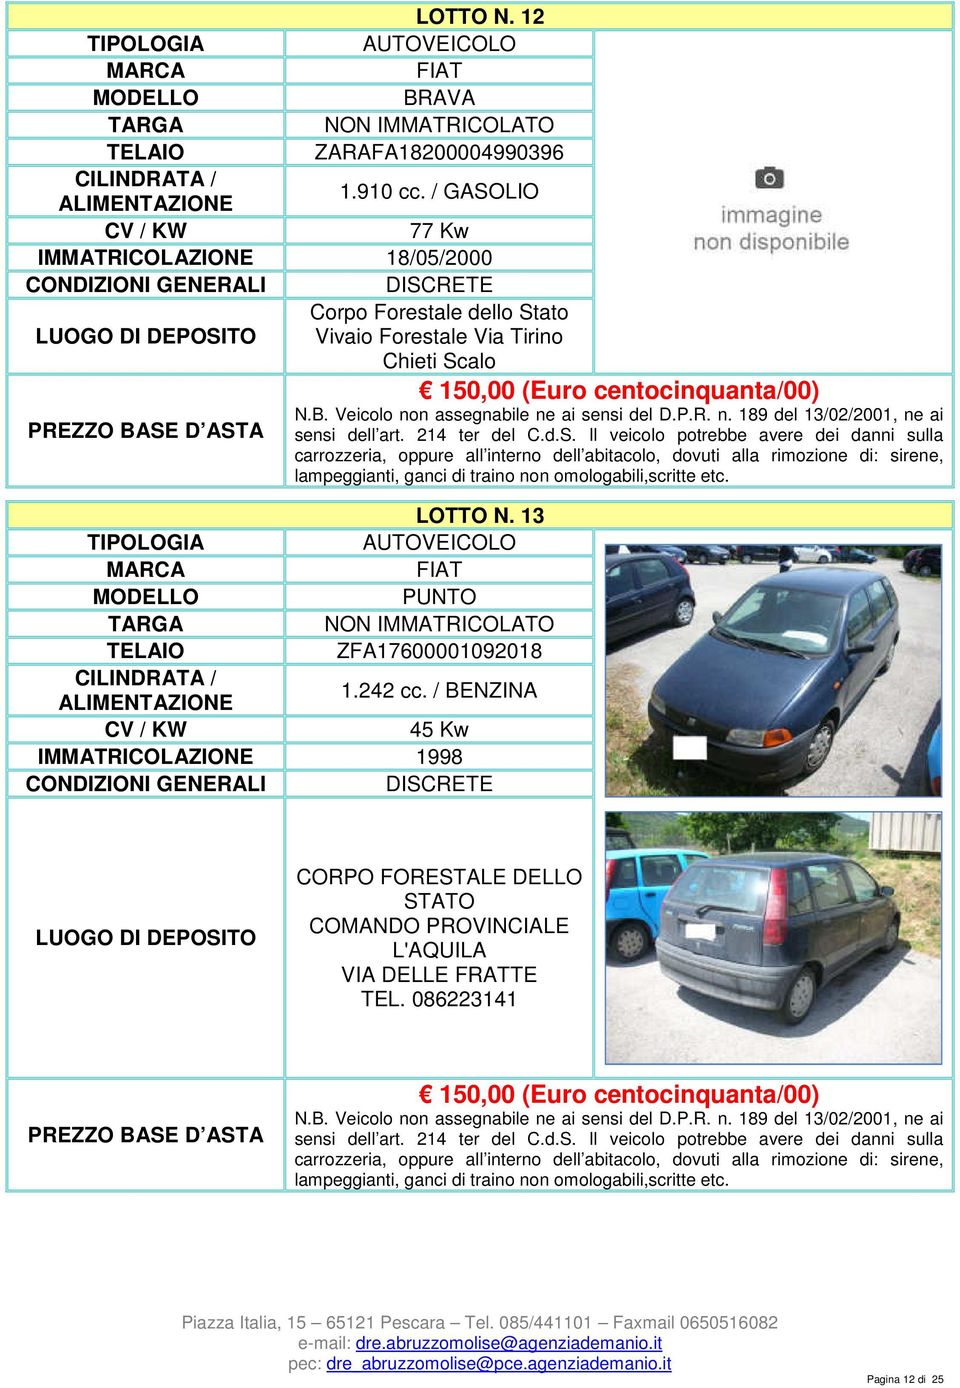 Tirino Chieti Scalo LOTTO N. 13 FIAT PUNTO ZFA17600001092018 1.242 cc.